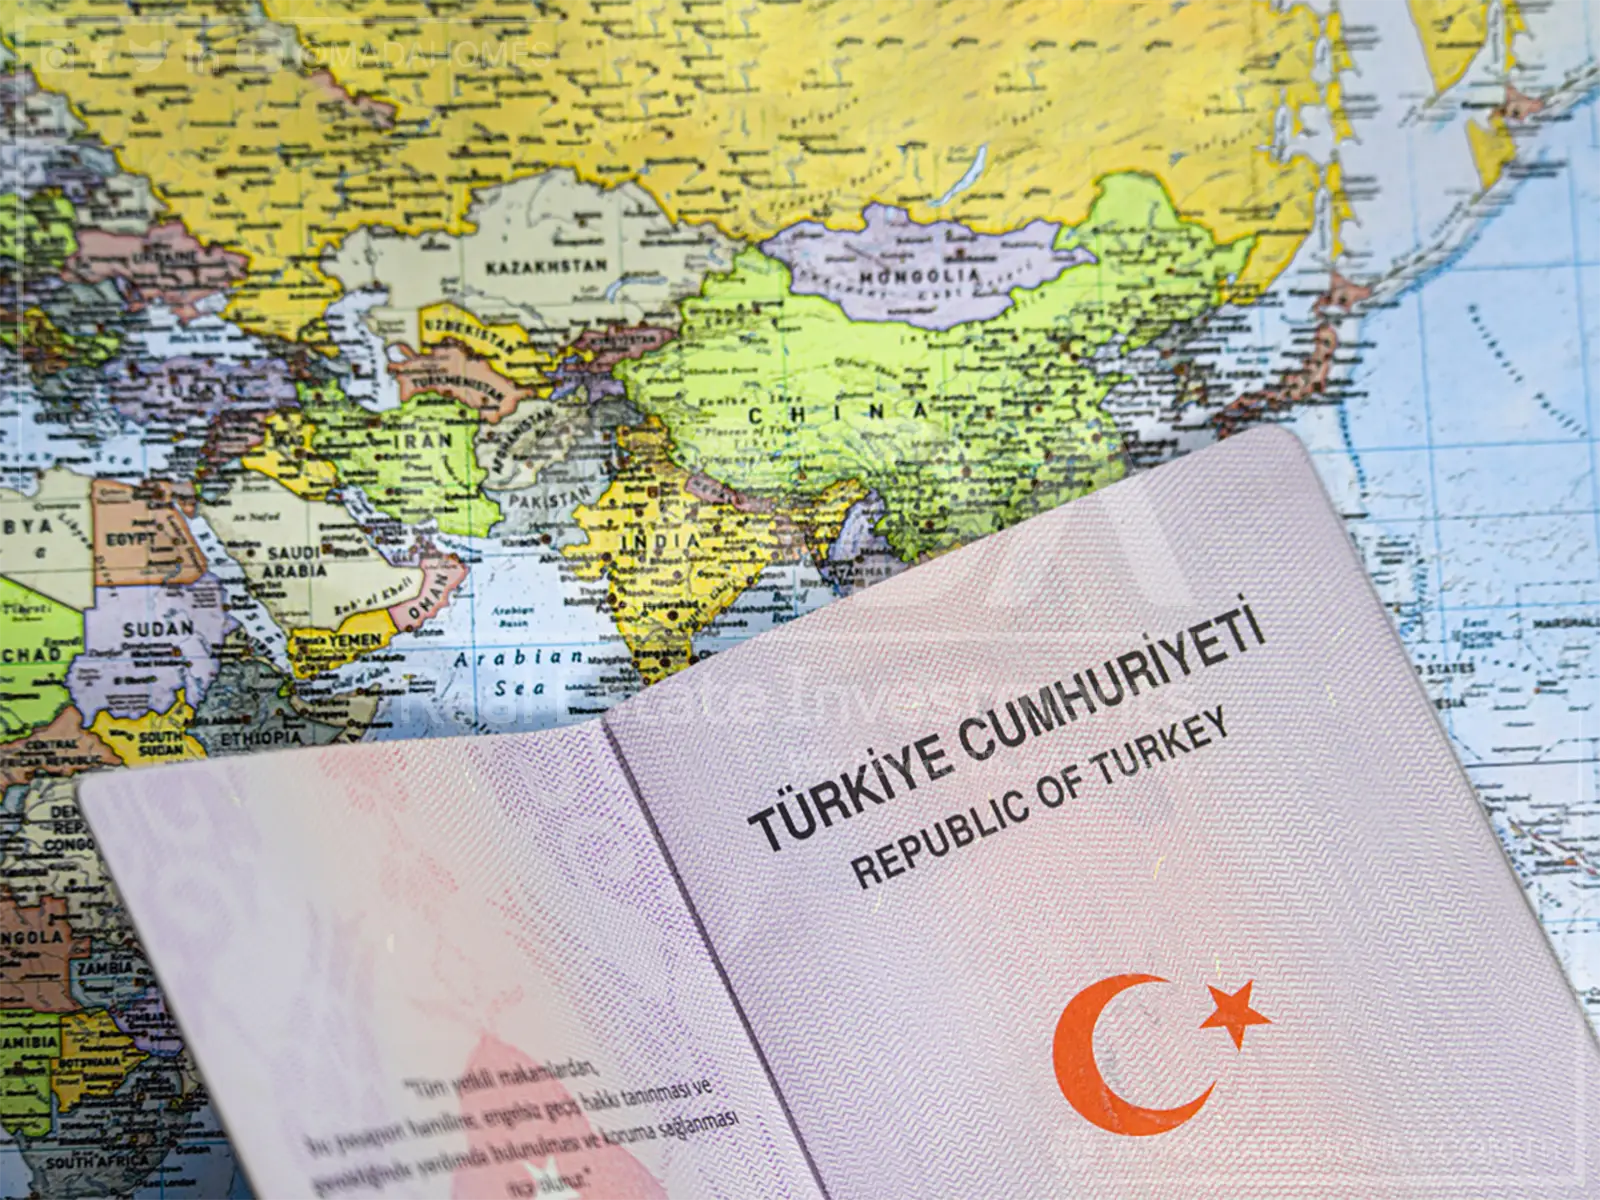 The cost of the Turkish passport